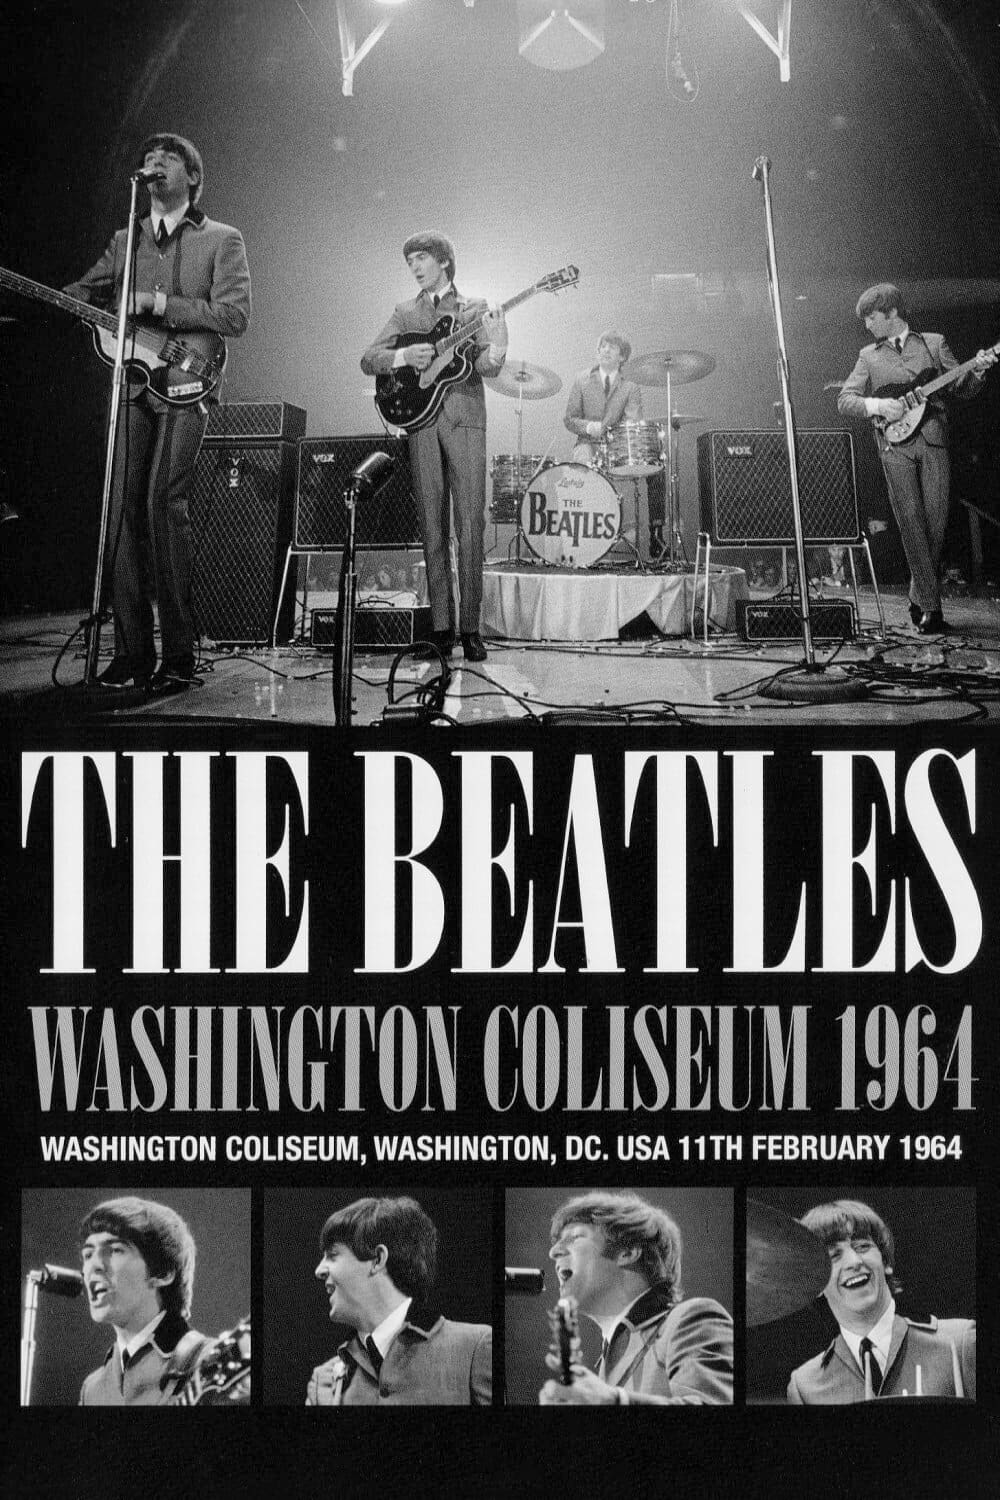 The Beatles - Live at the Washington Coliseum, 1964